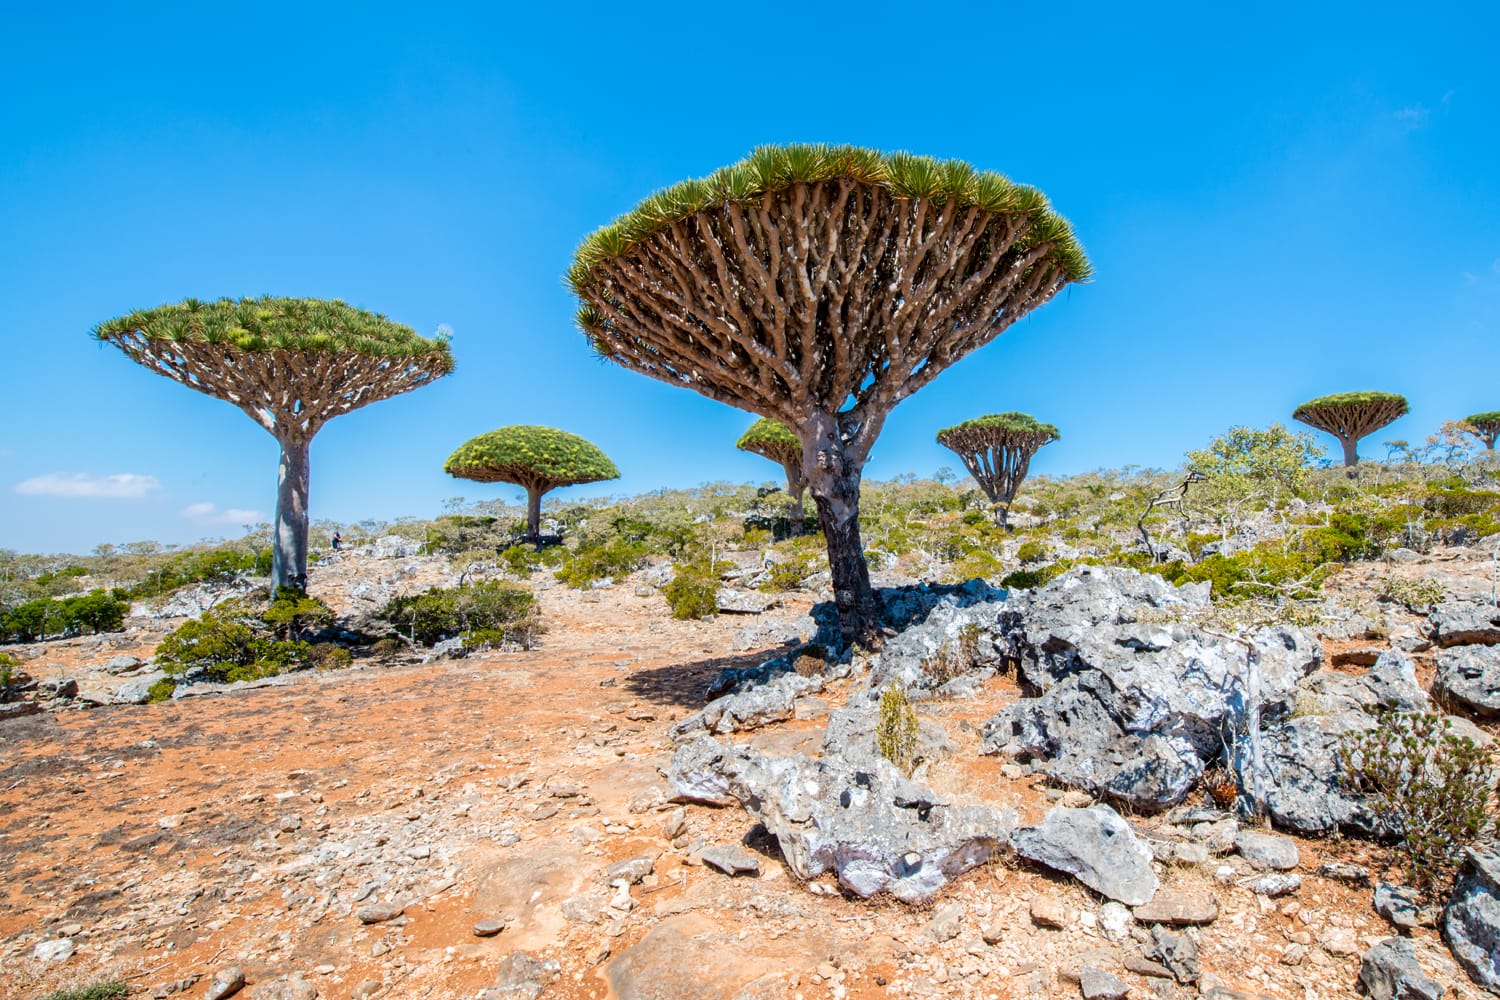 Dragon tree on the Socotra Island, Yemen